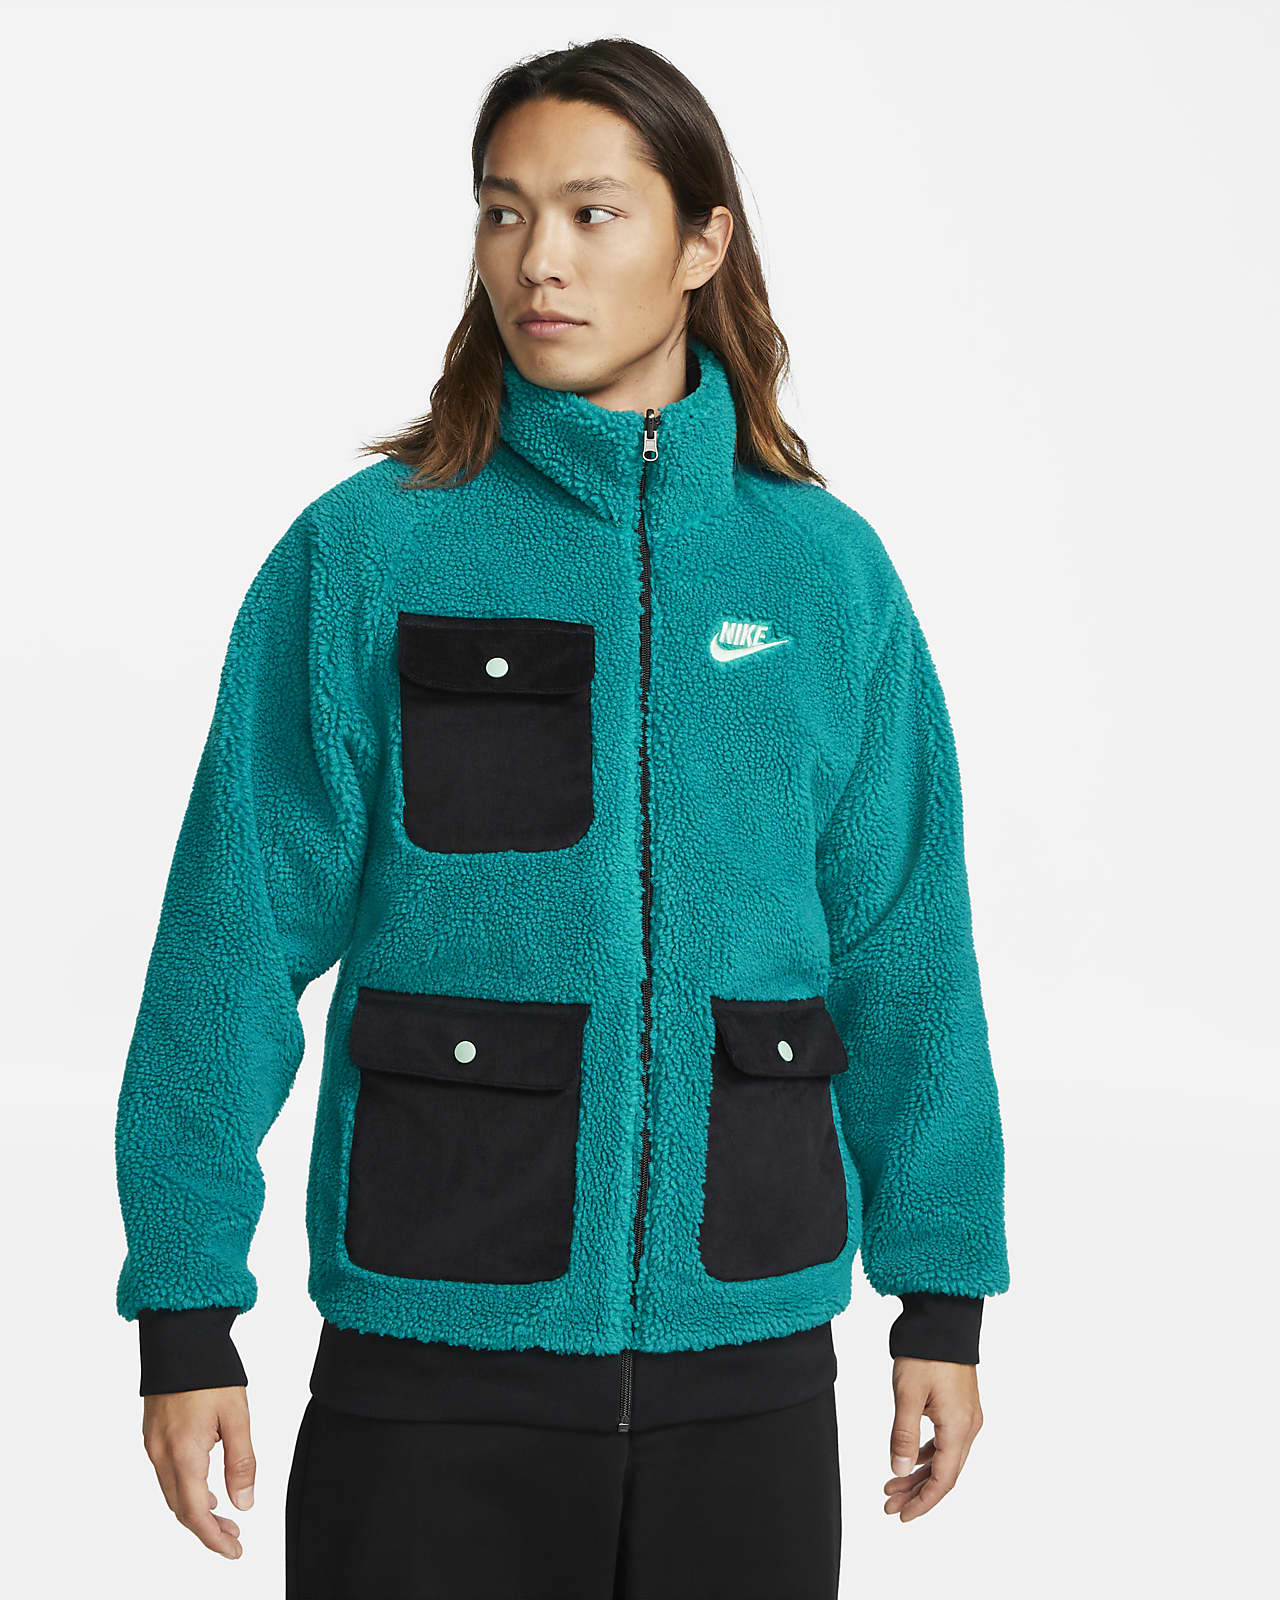 Elegancia Leeds estoy de acuerdo Nike Sportswear Men's Full-Zip Reversible Jacket. Nike JP